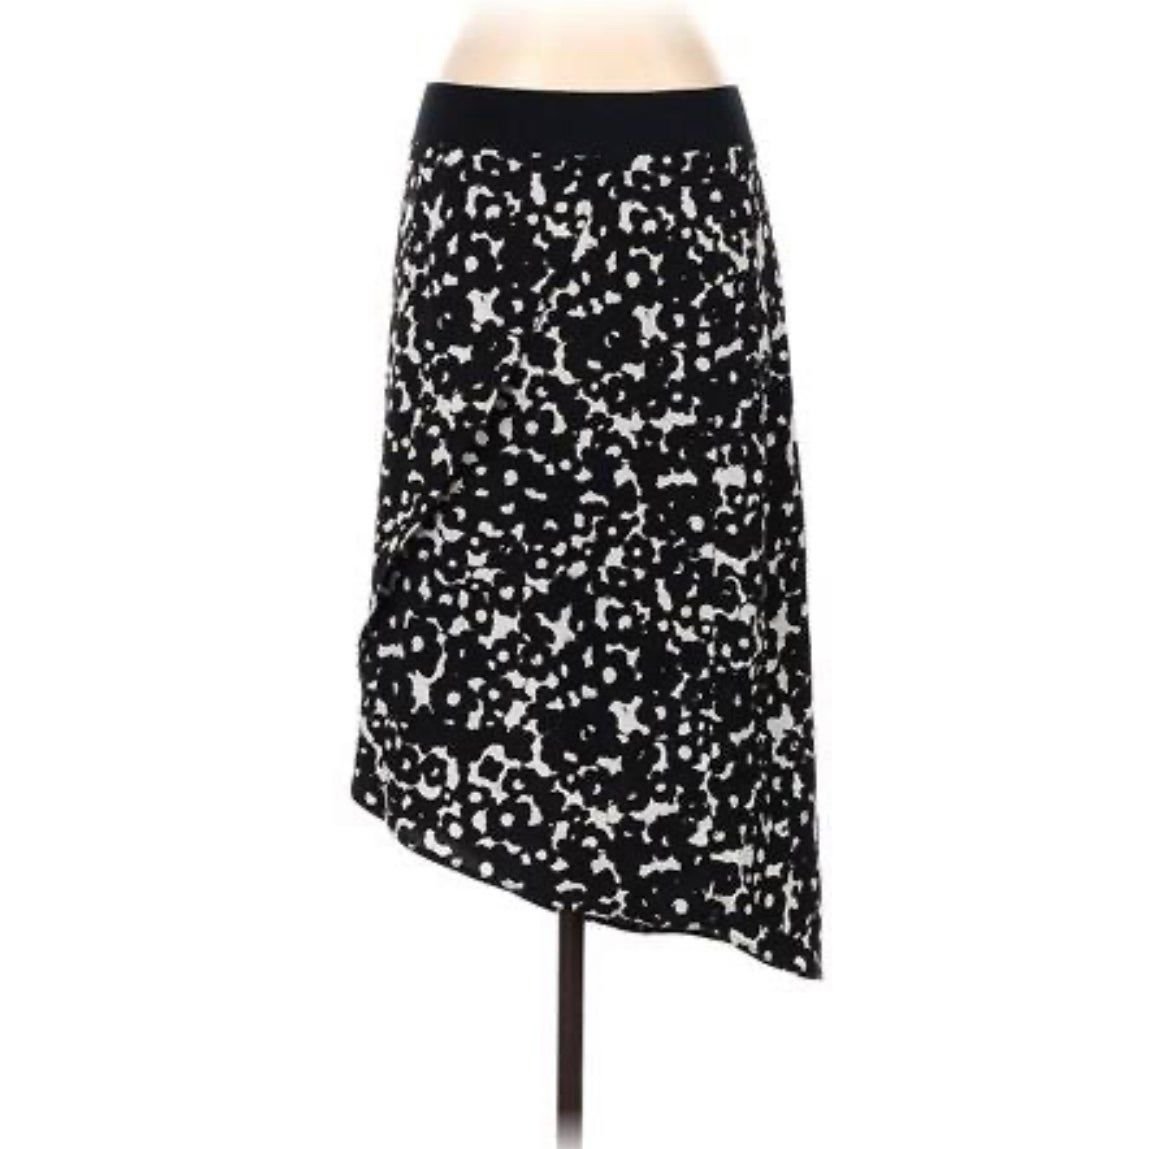 the Lowest price Women’s CAbi Dixon black and white high low midi skirt size medium style 5321 noMDZ3c0u Online Exclusive